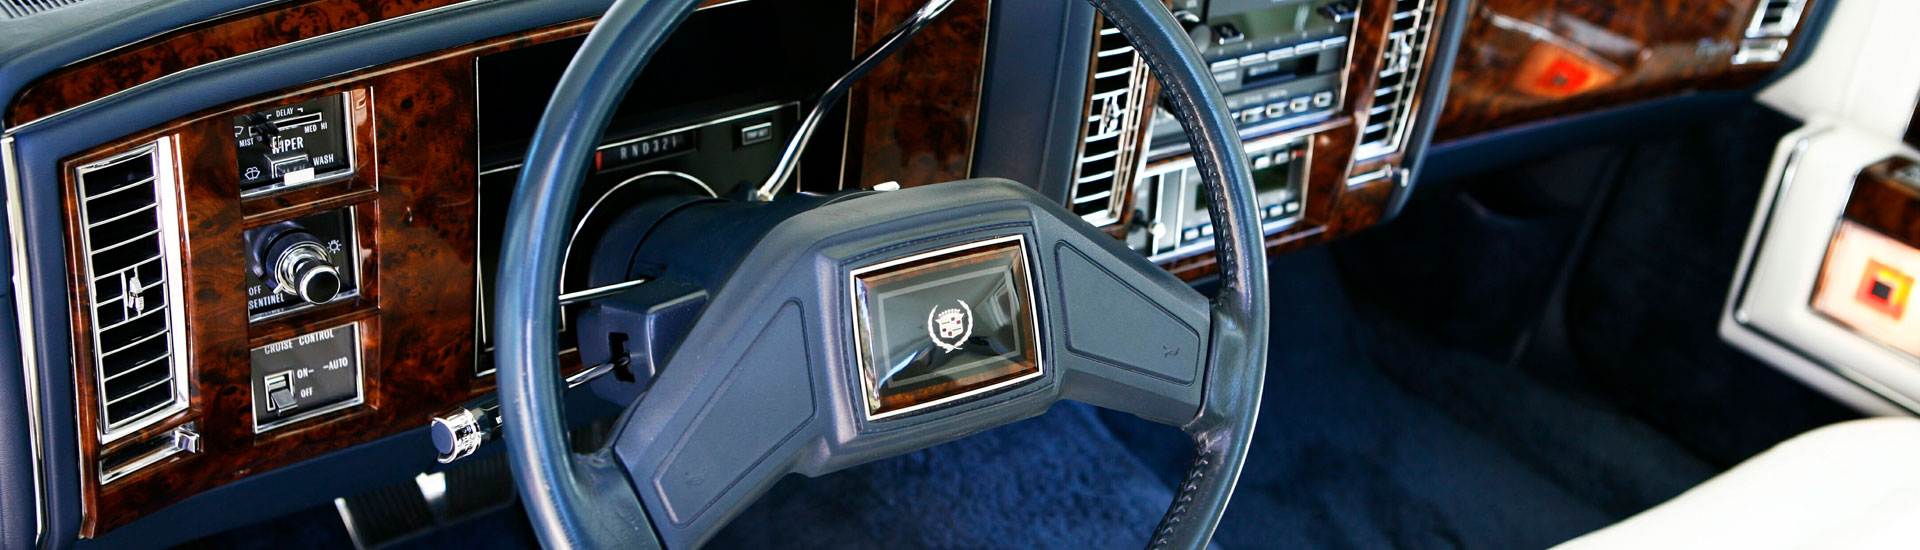 Cadillac Brougham Dash Kits